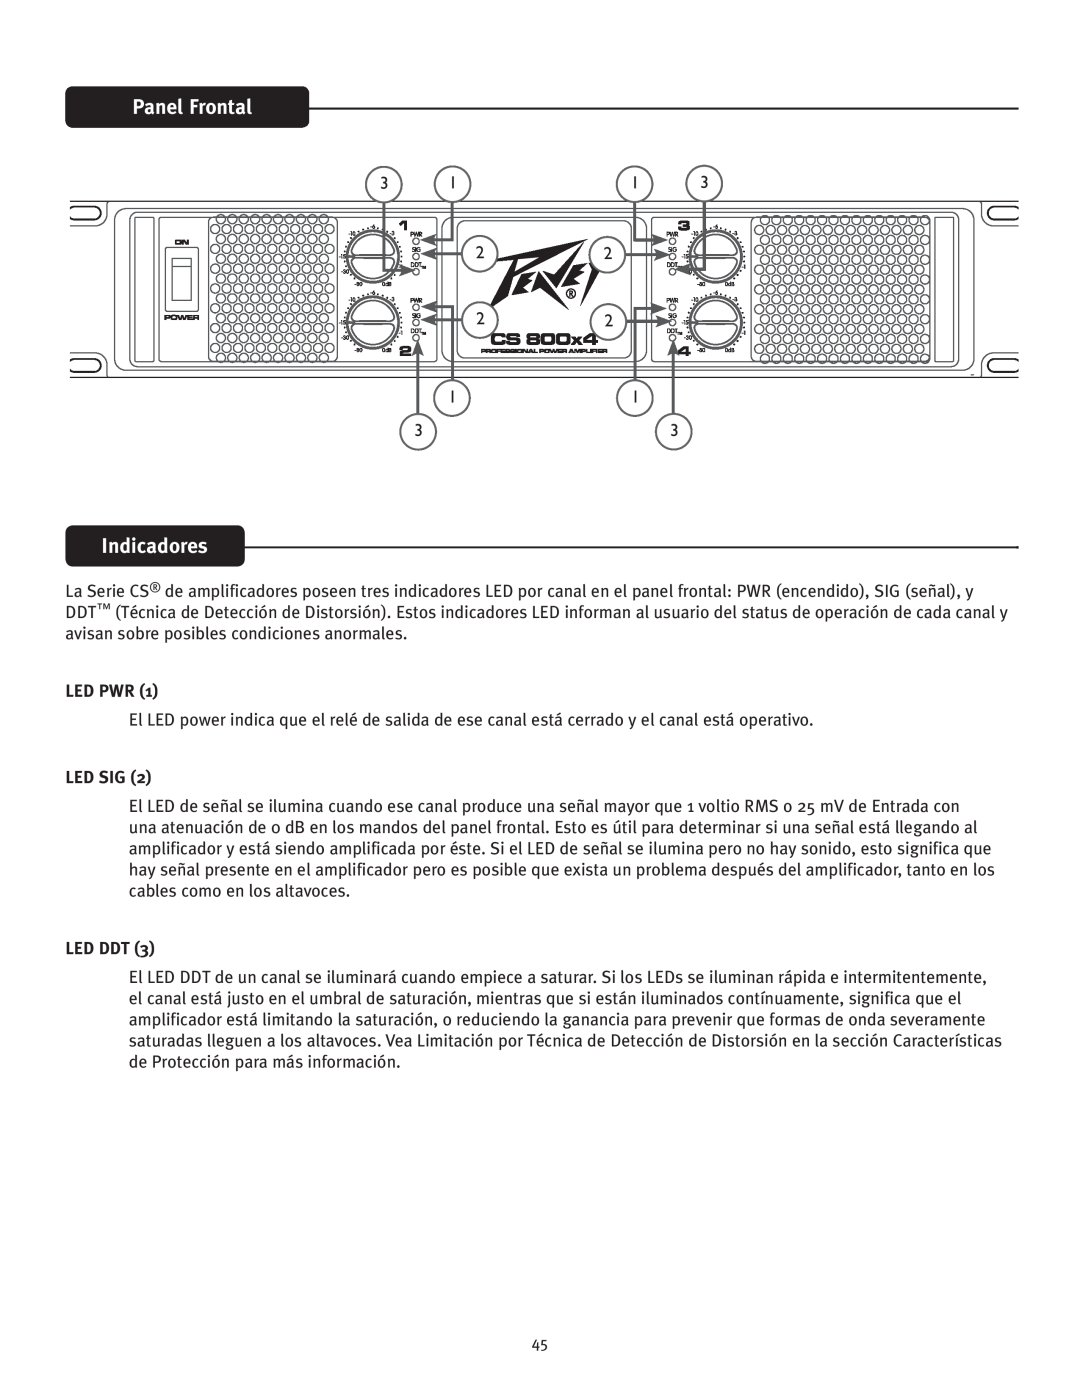 Peavey CS 800x4 owner manual Indicadores, Panel Frontal, Led Pwr, Led Sig, Led Ddt 